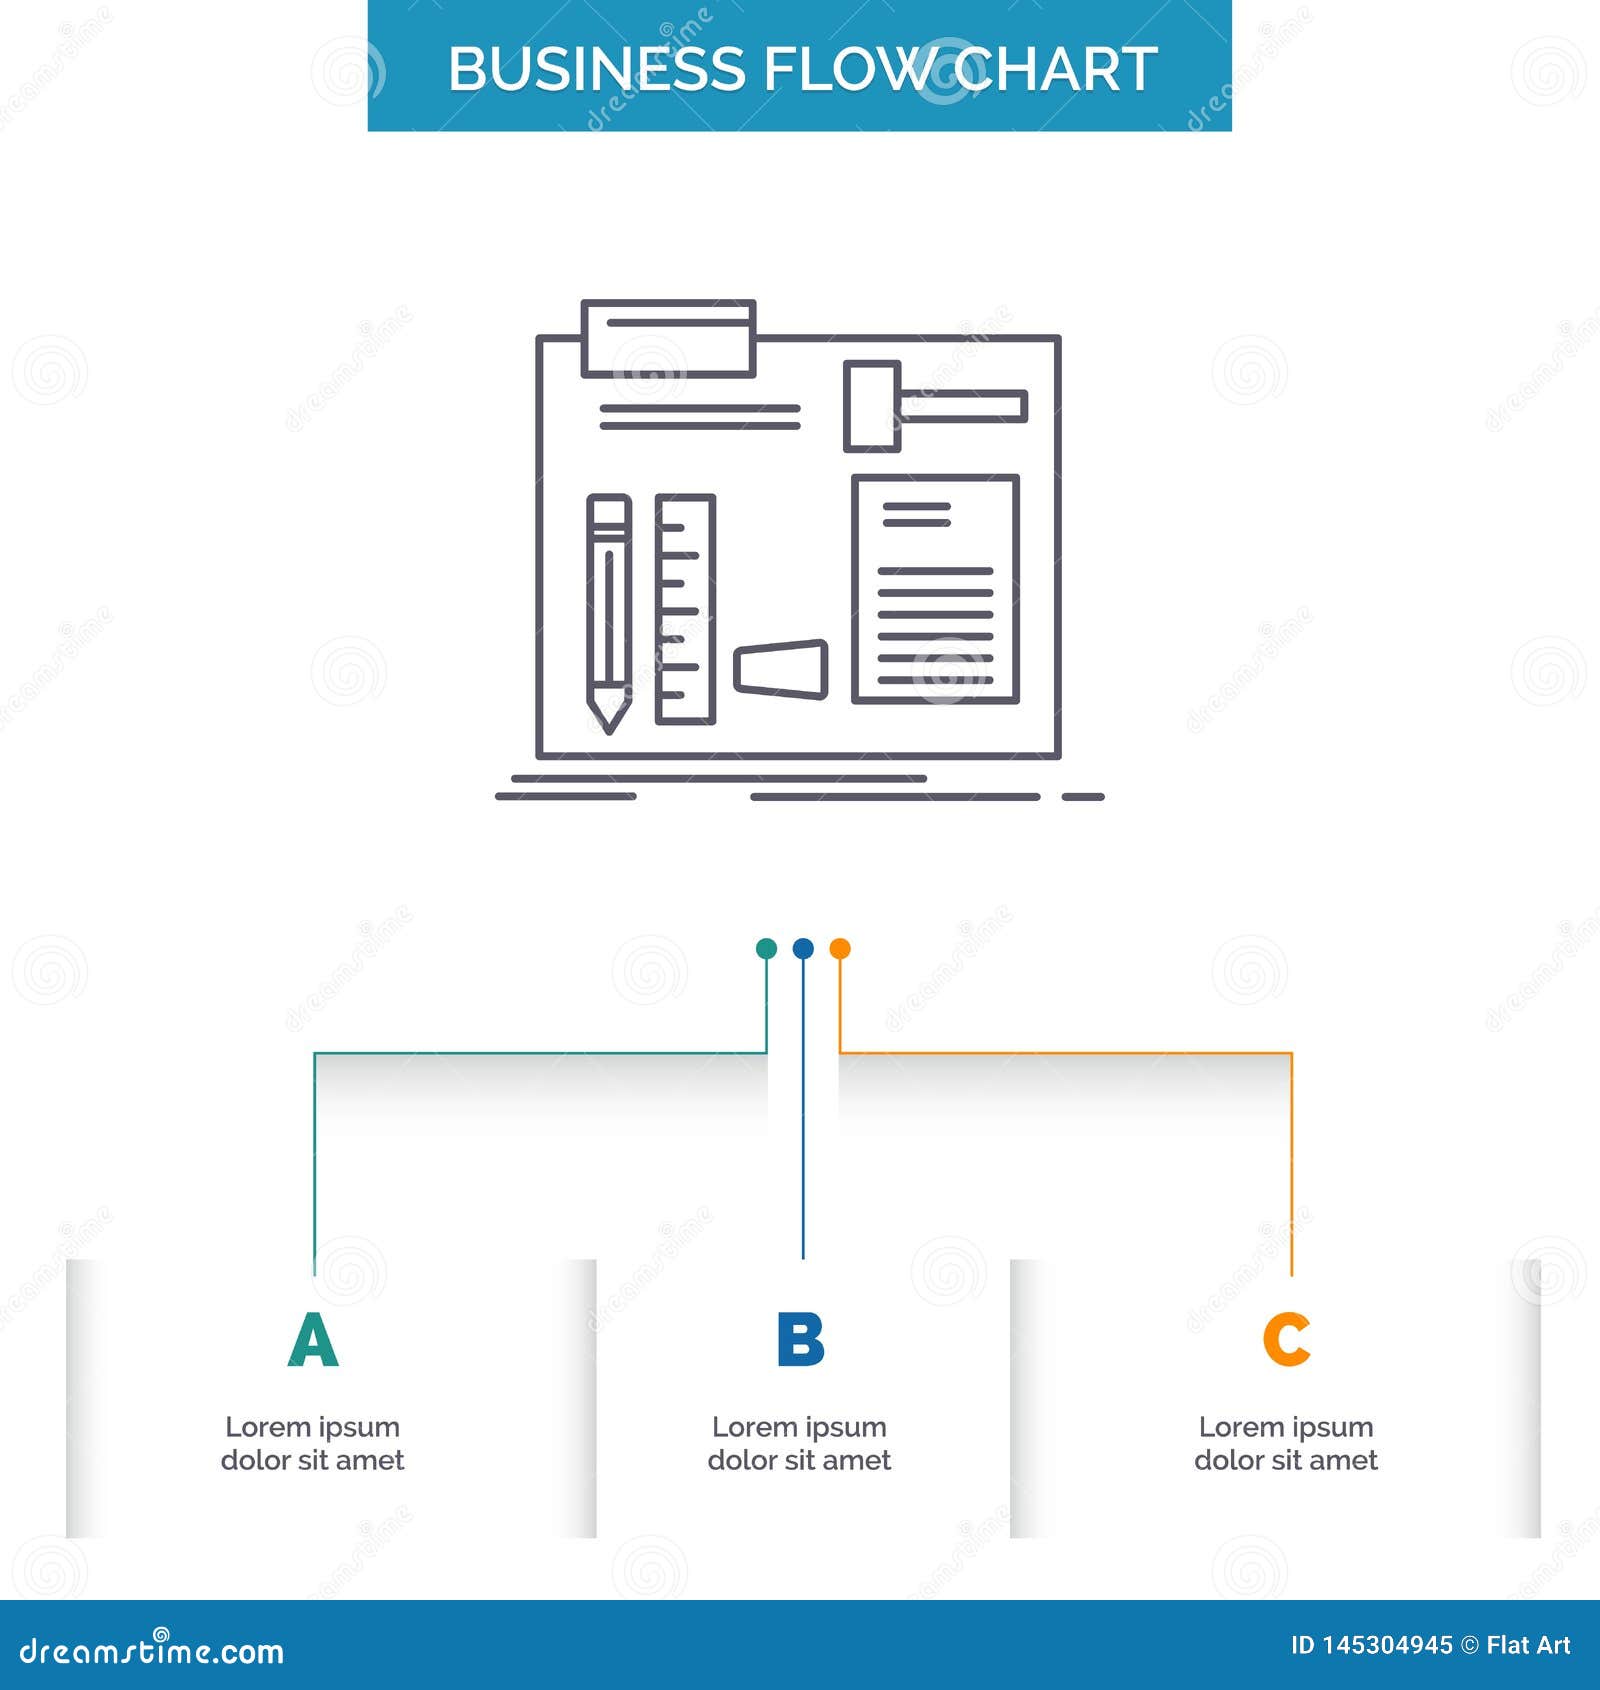 Diy Flow Chart